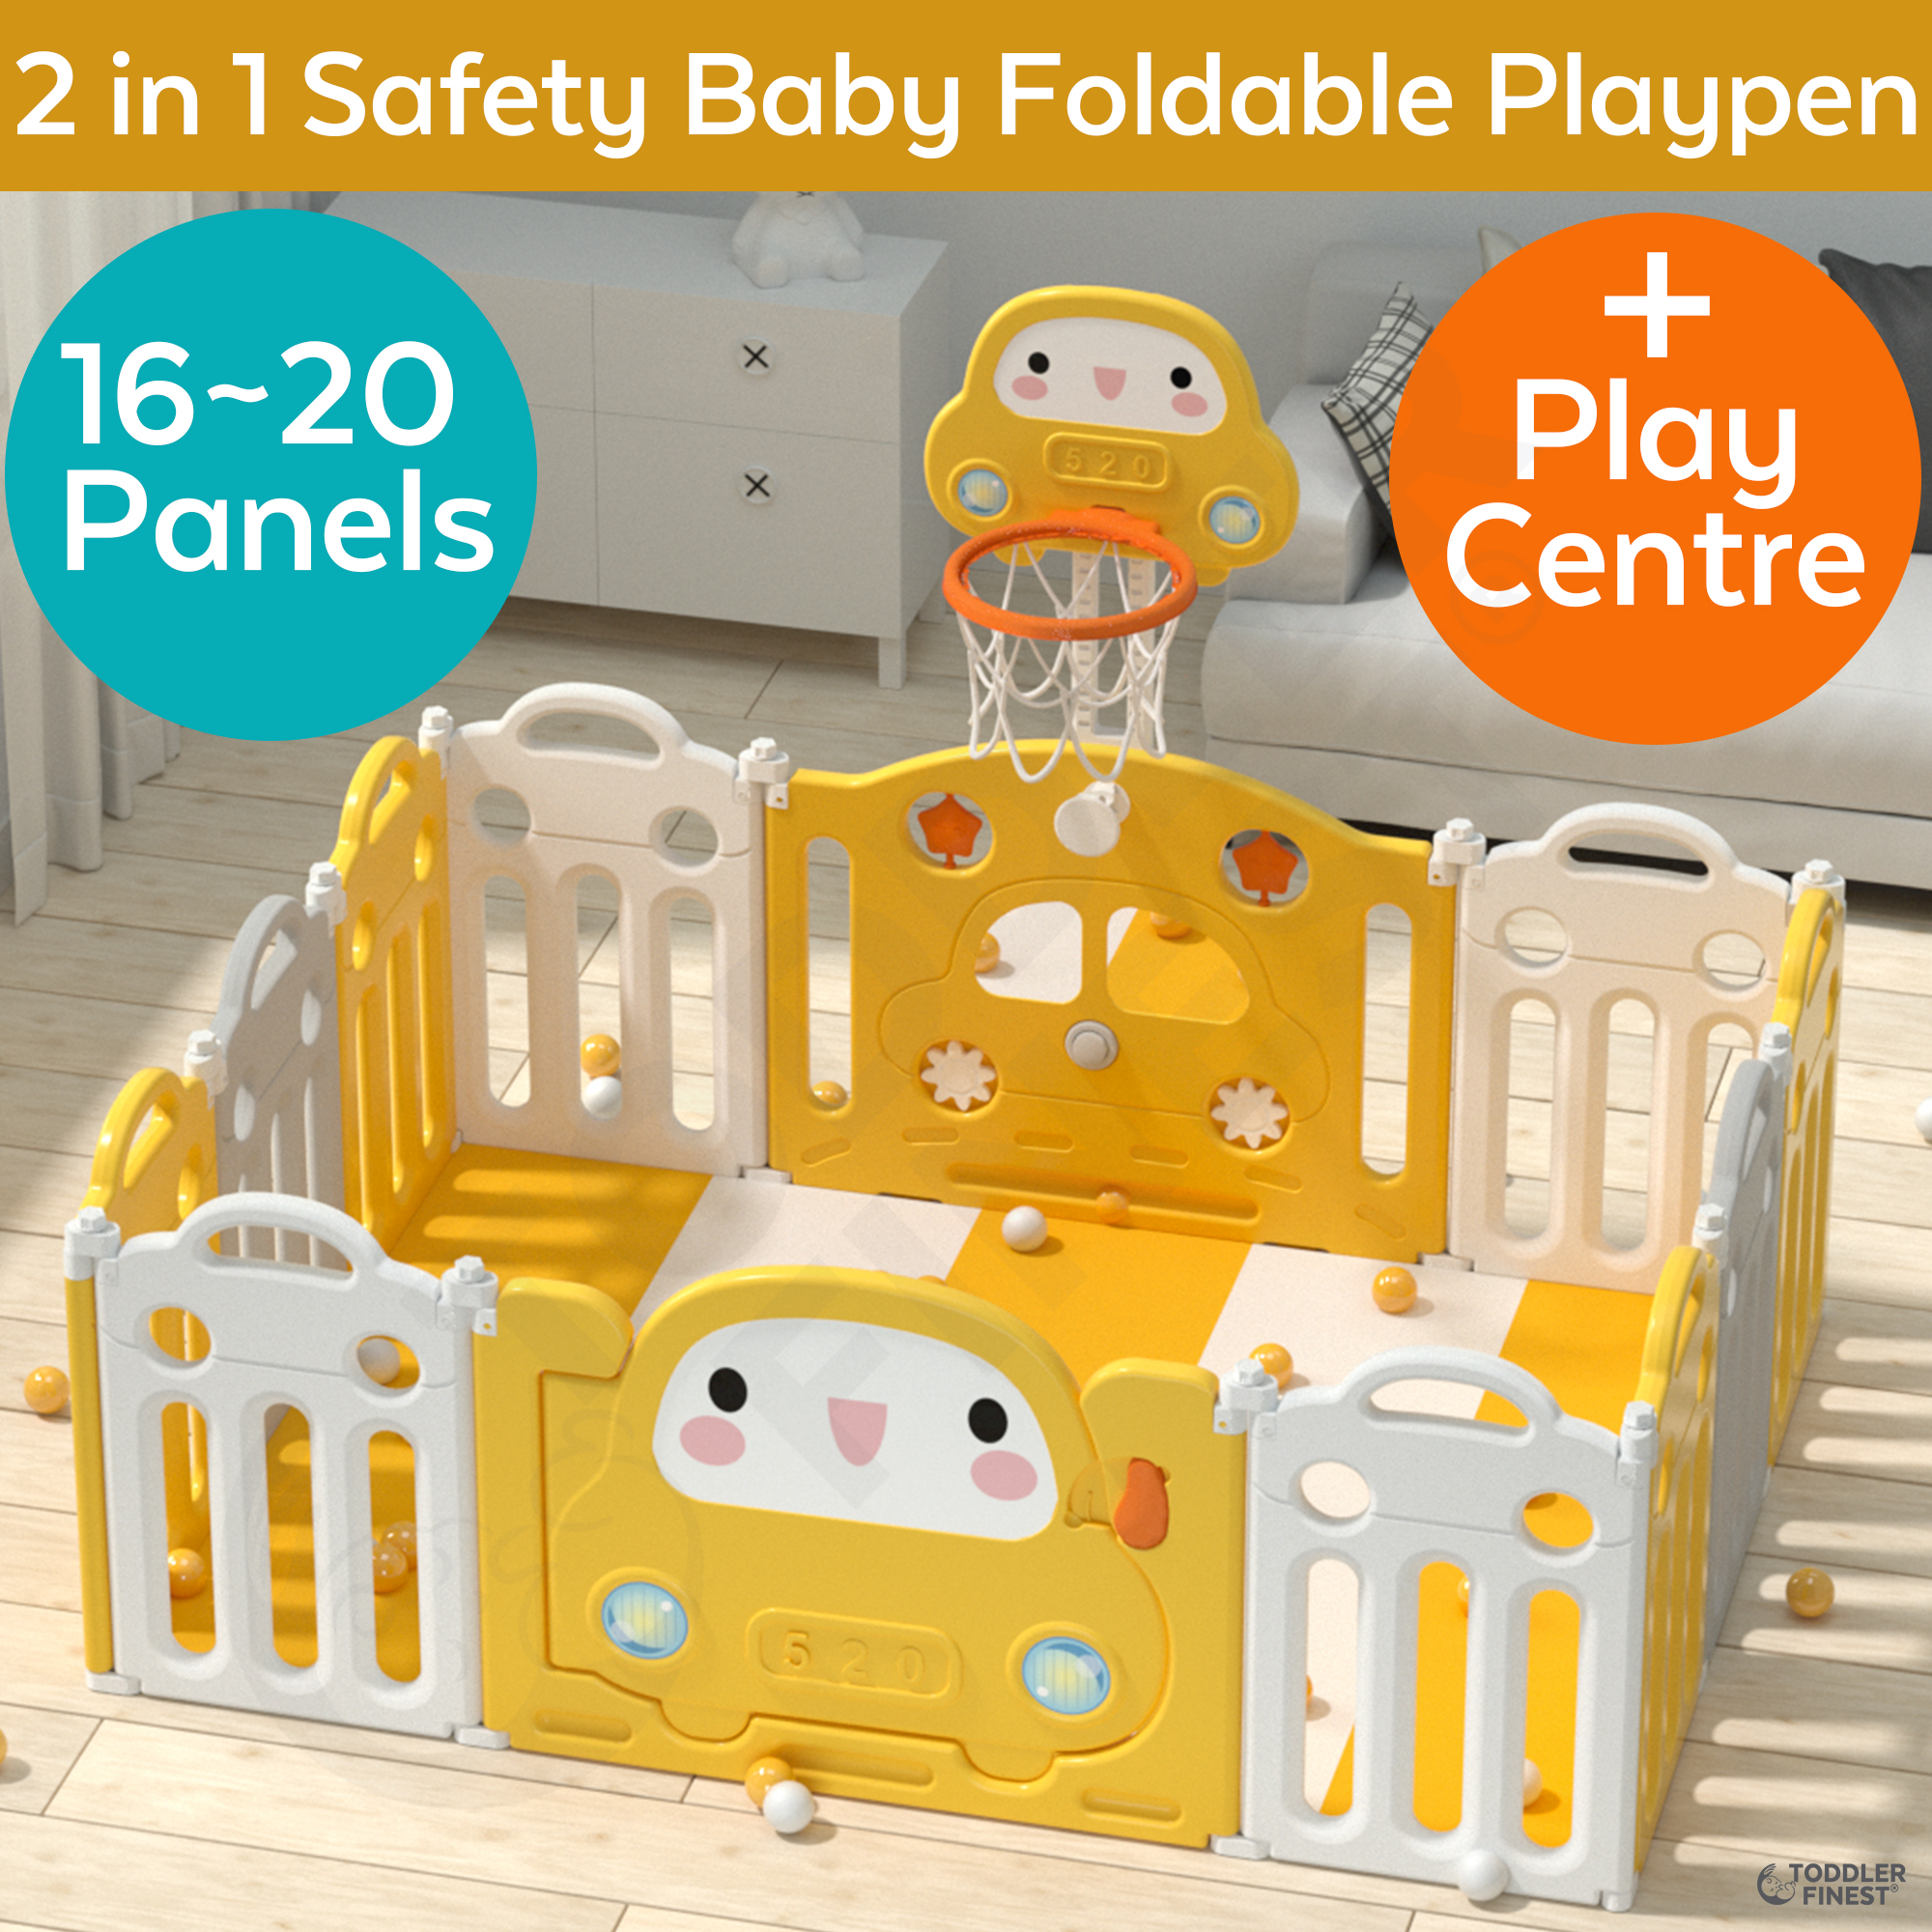 Centro attività Baby Playpen Kids Safety Play yard Home indoor outdoor con 14 pannelli della penna W007-2panels 